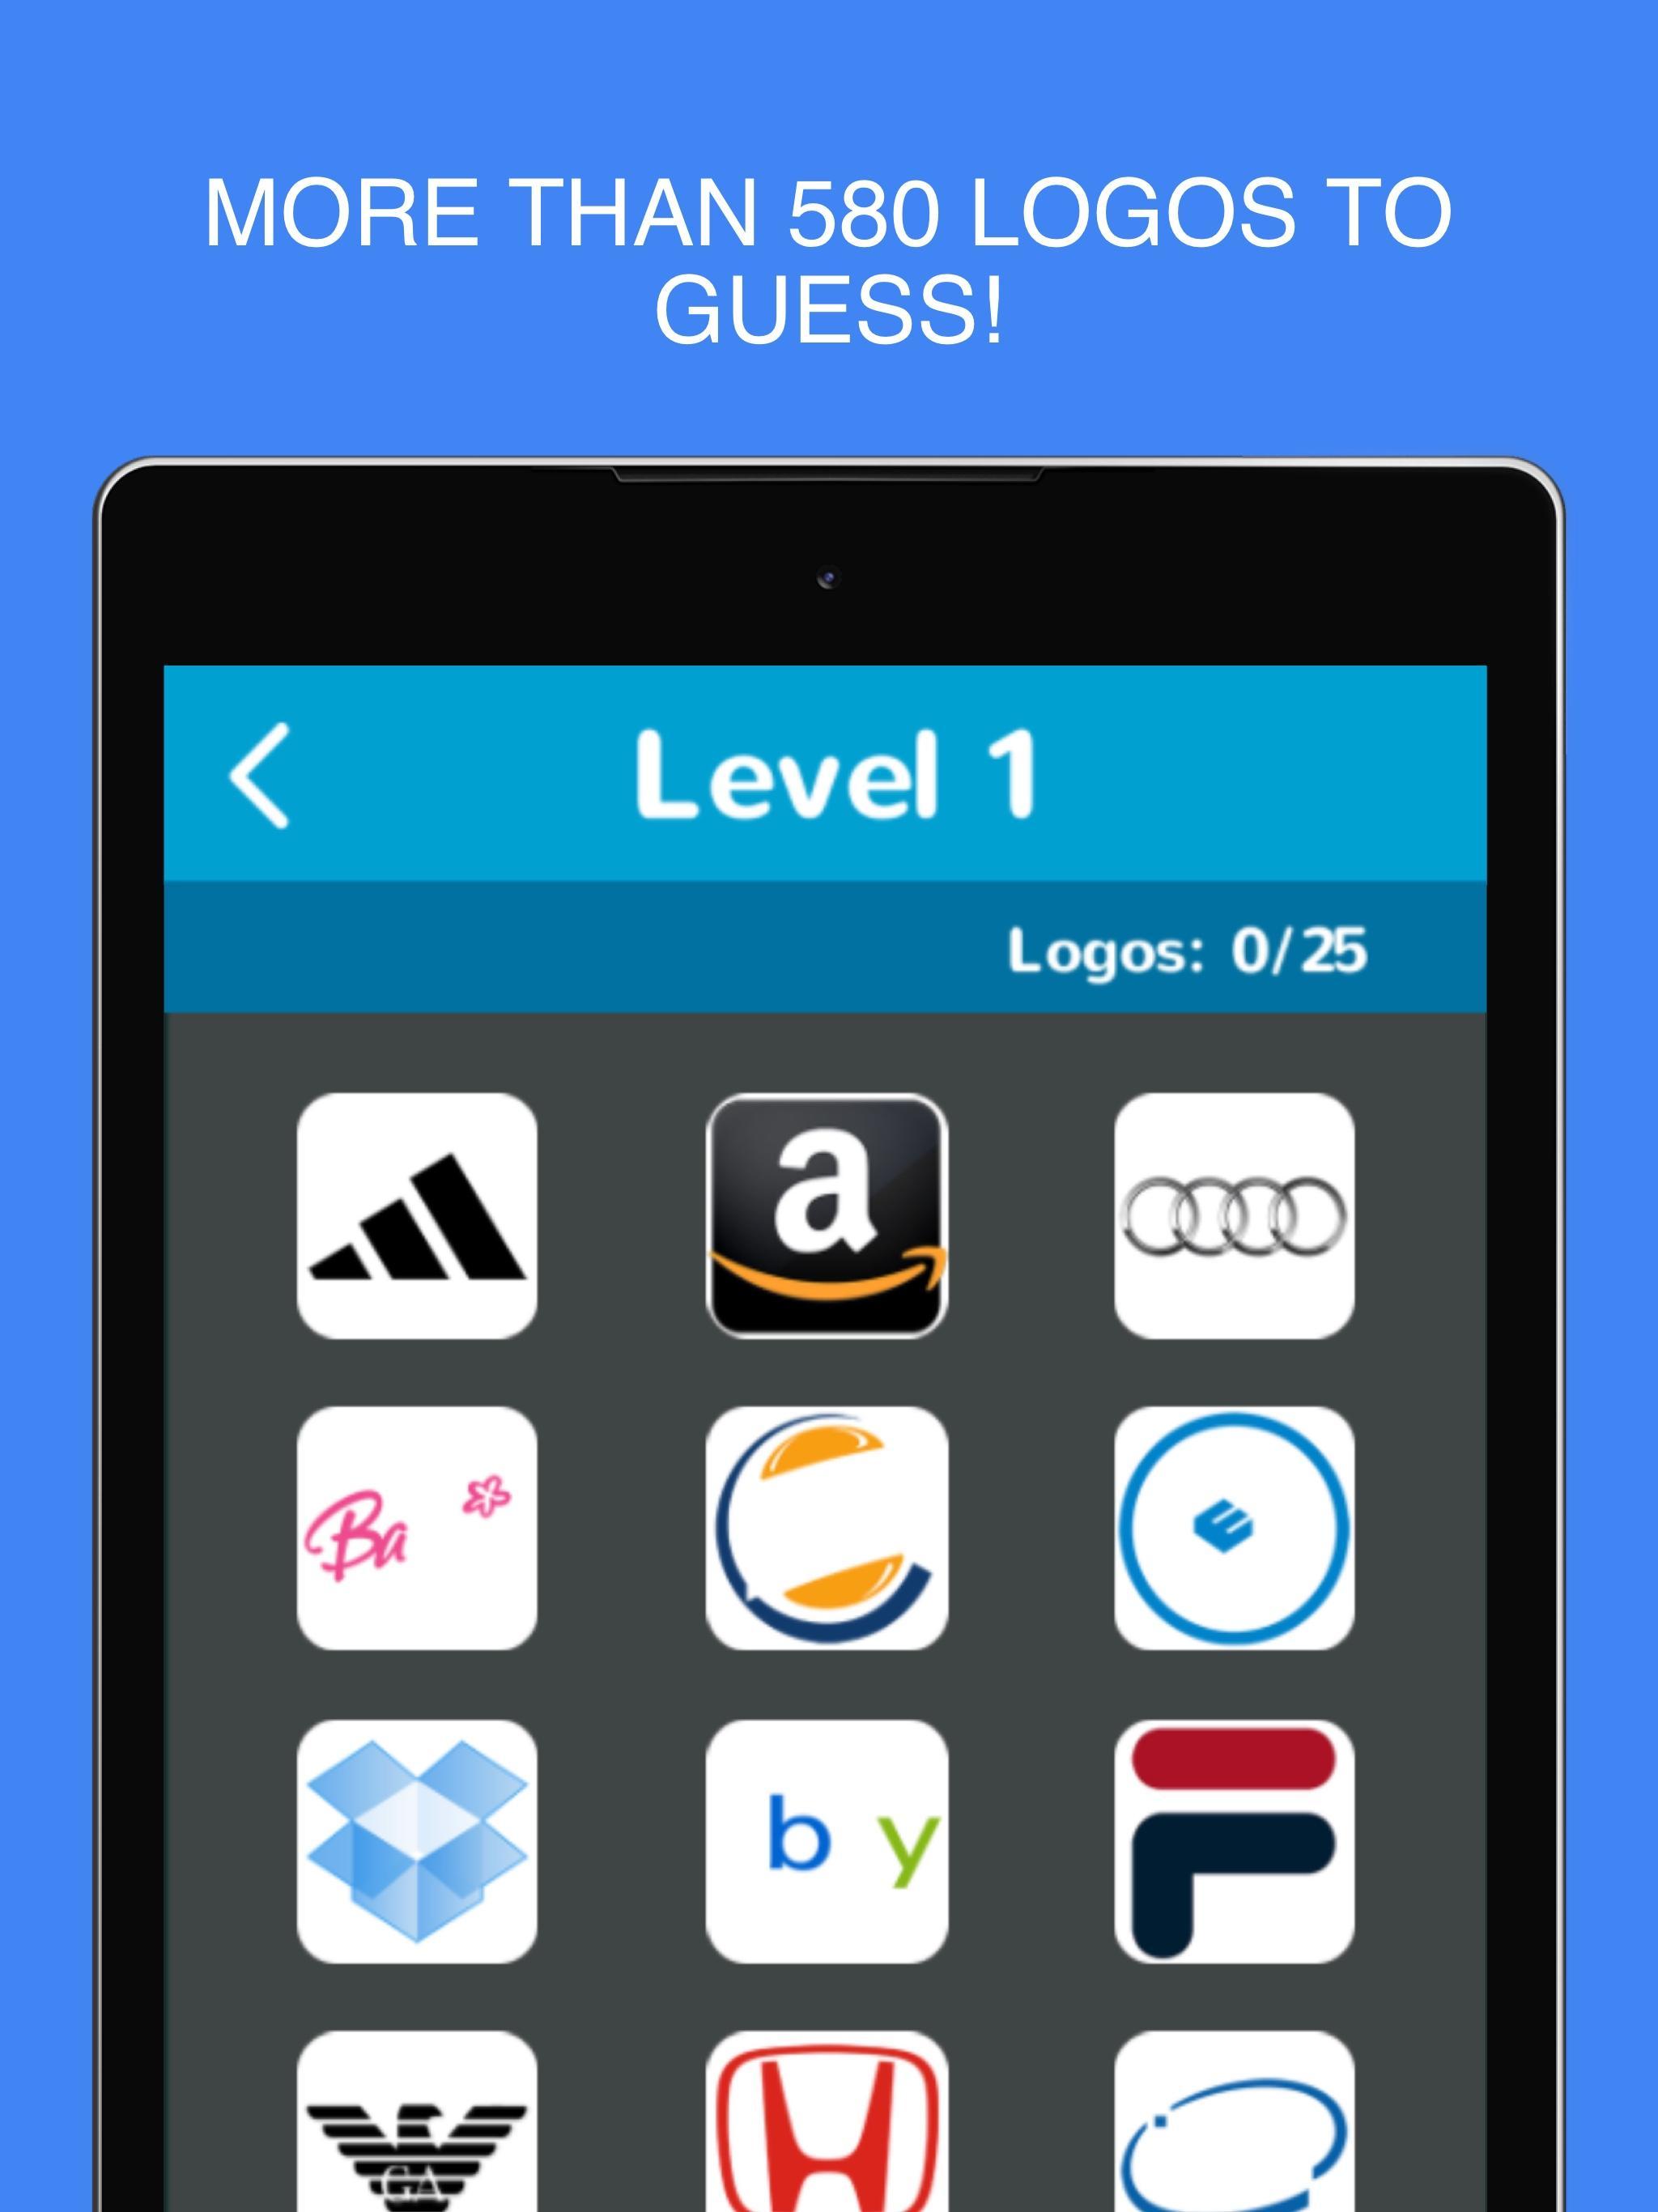 Guess The Brand: Logo Quiz Game Free 1.9.5 Screenshot 8